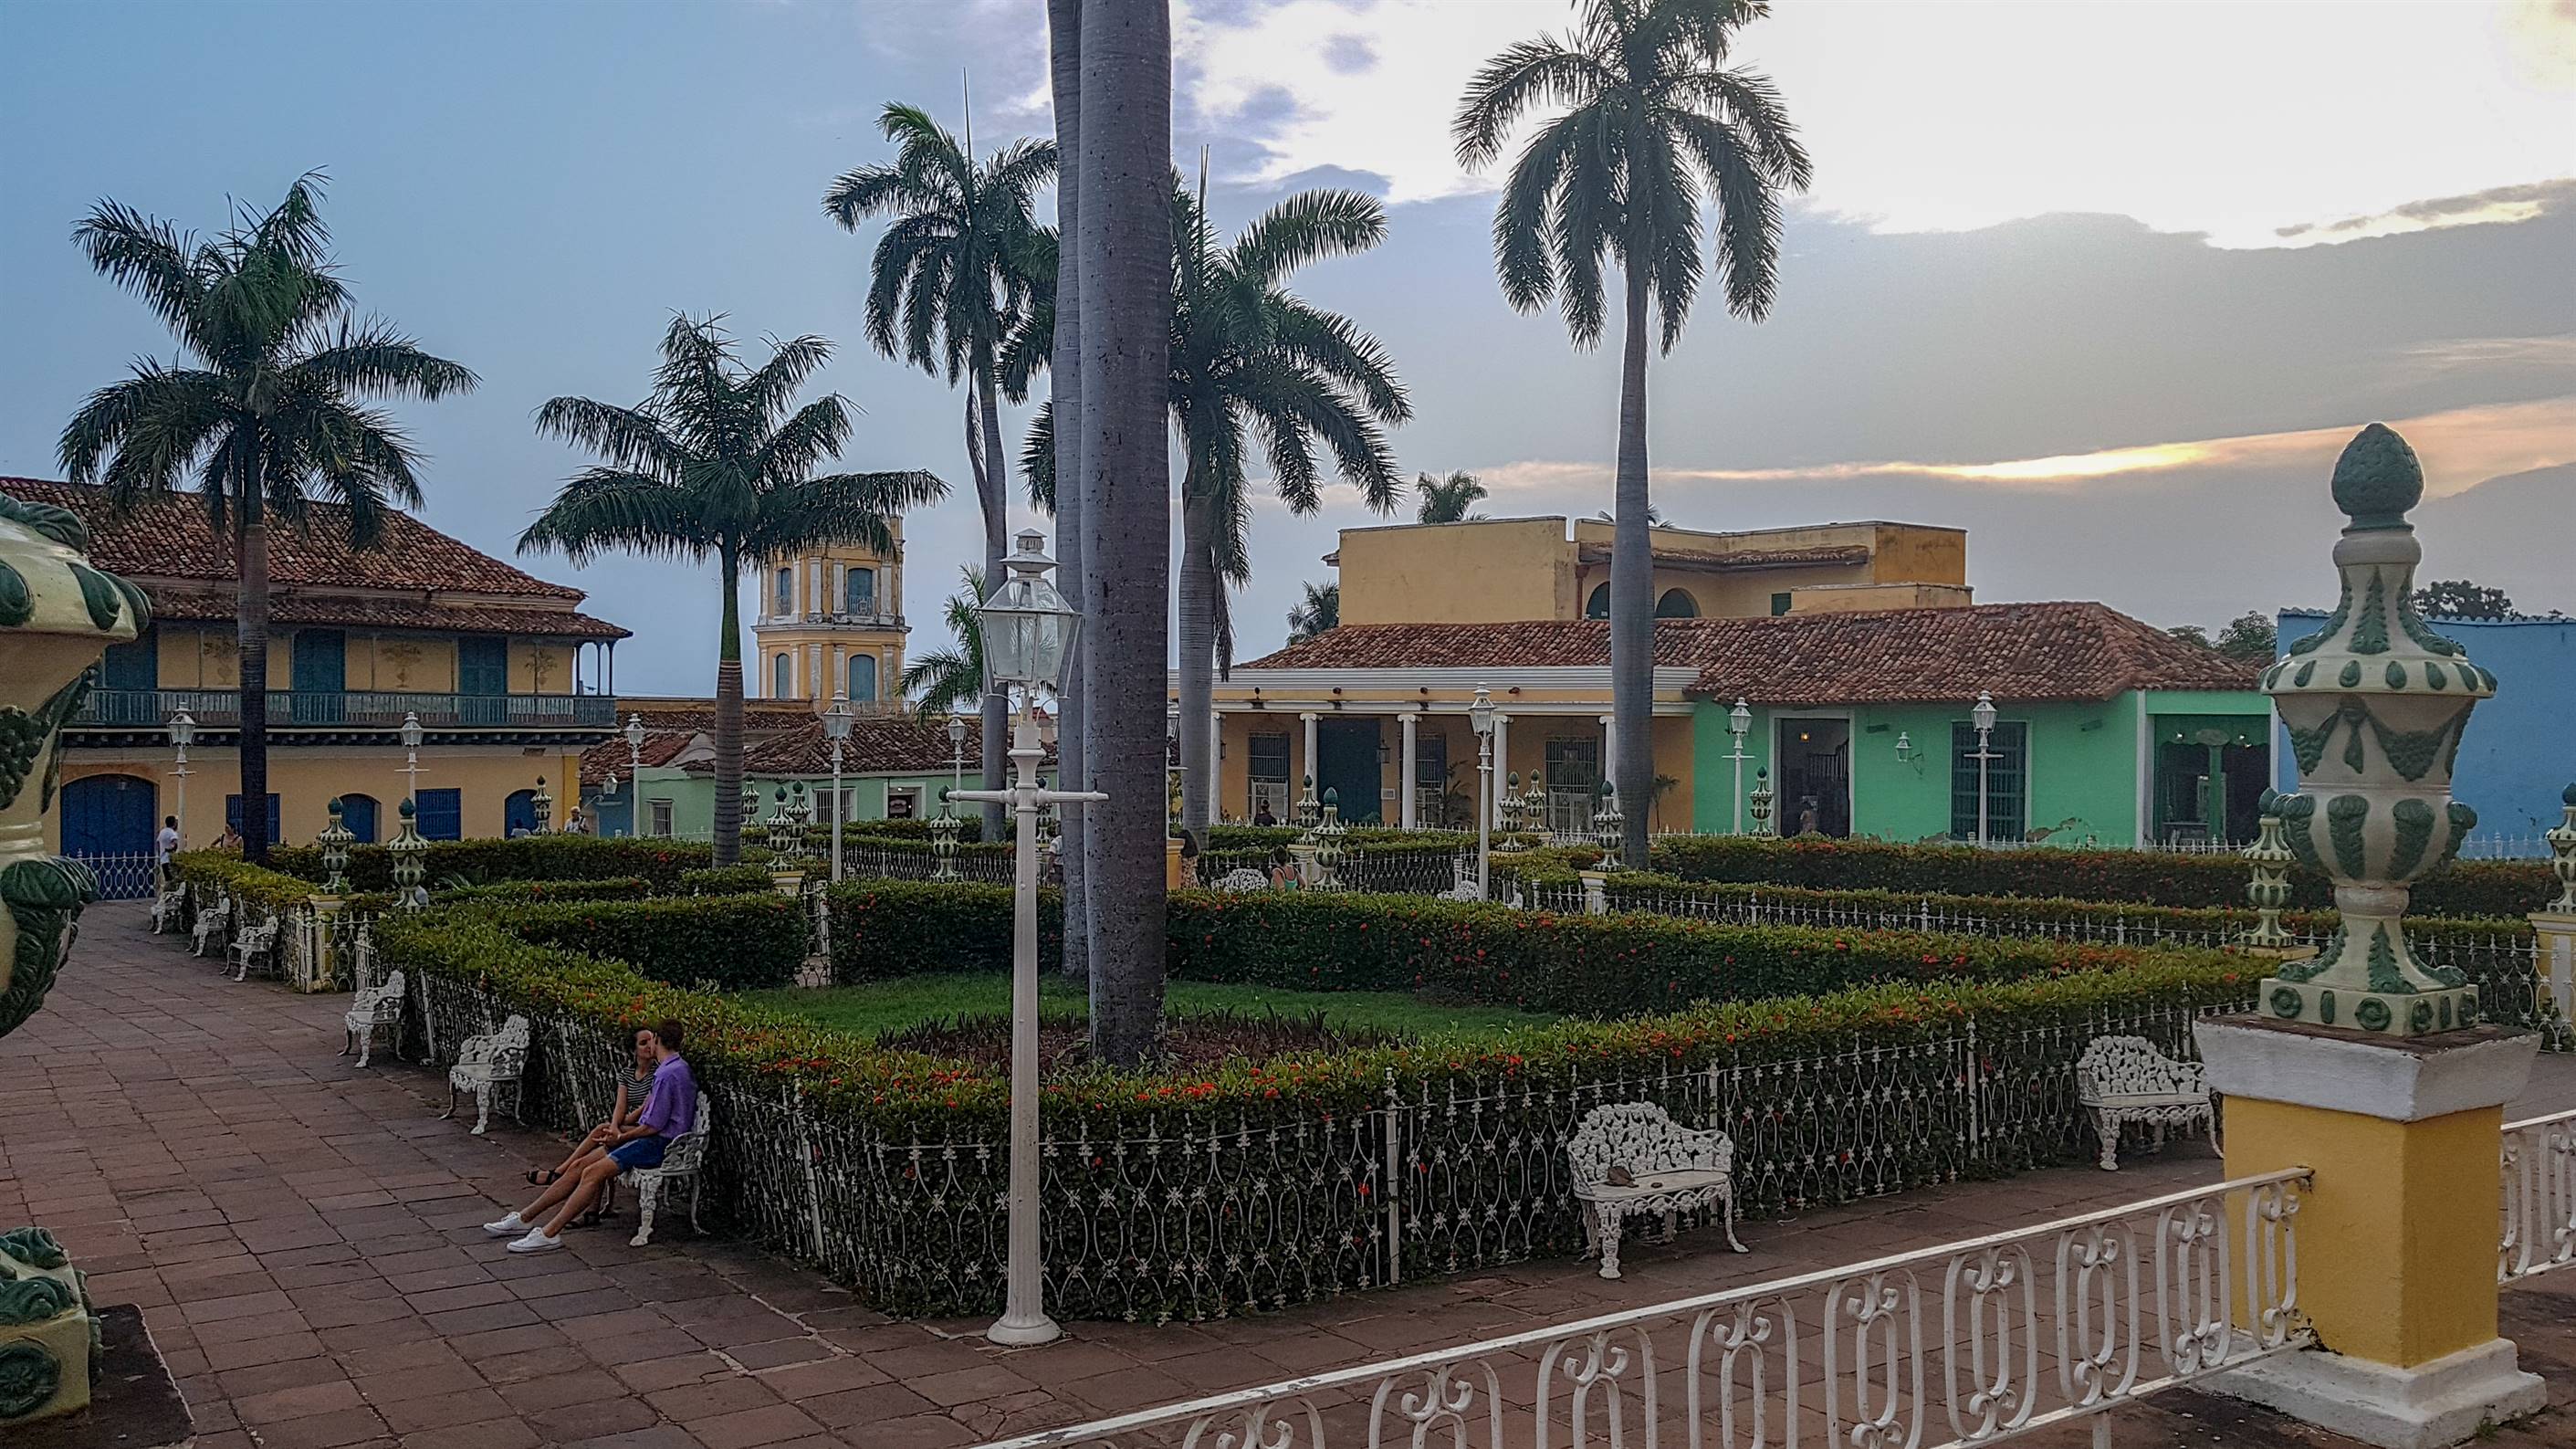 Plazza Mayor, Trinidad, Cuba